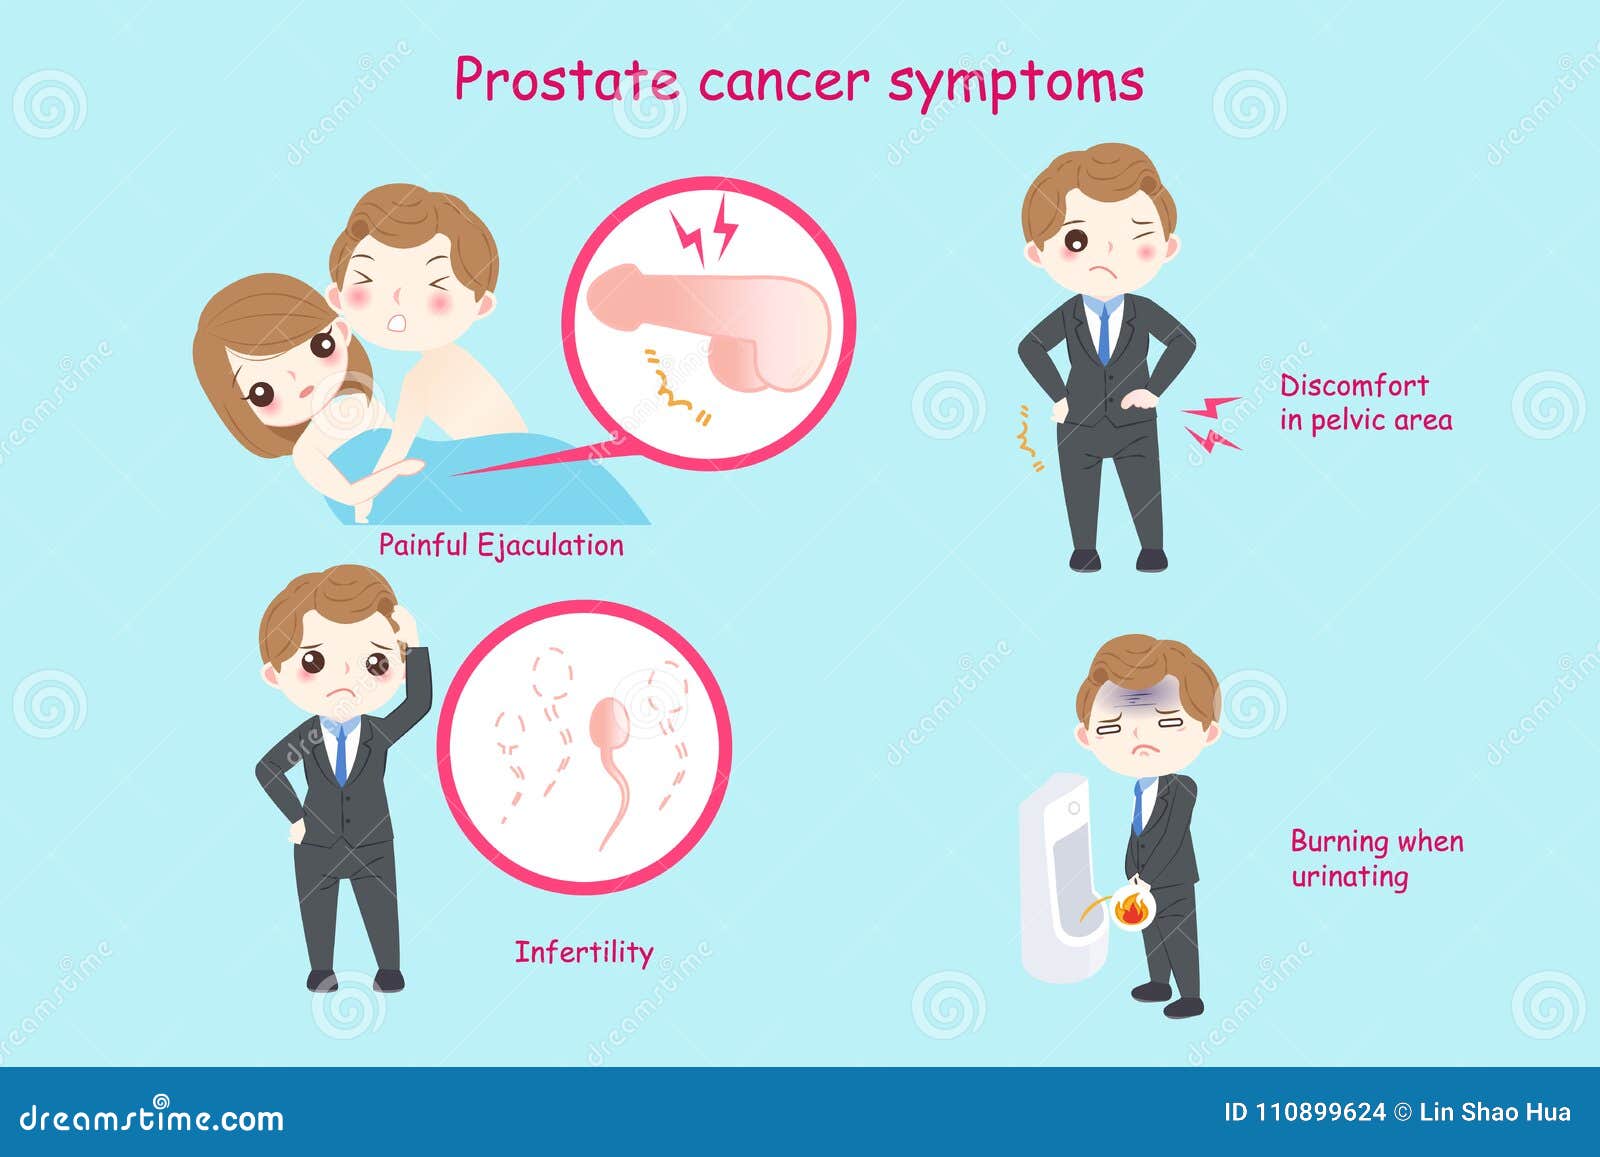 sintoma de cancer prostata